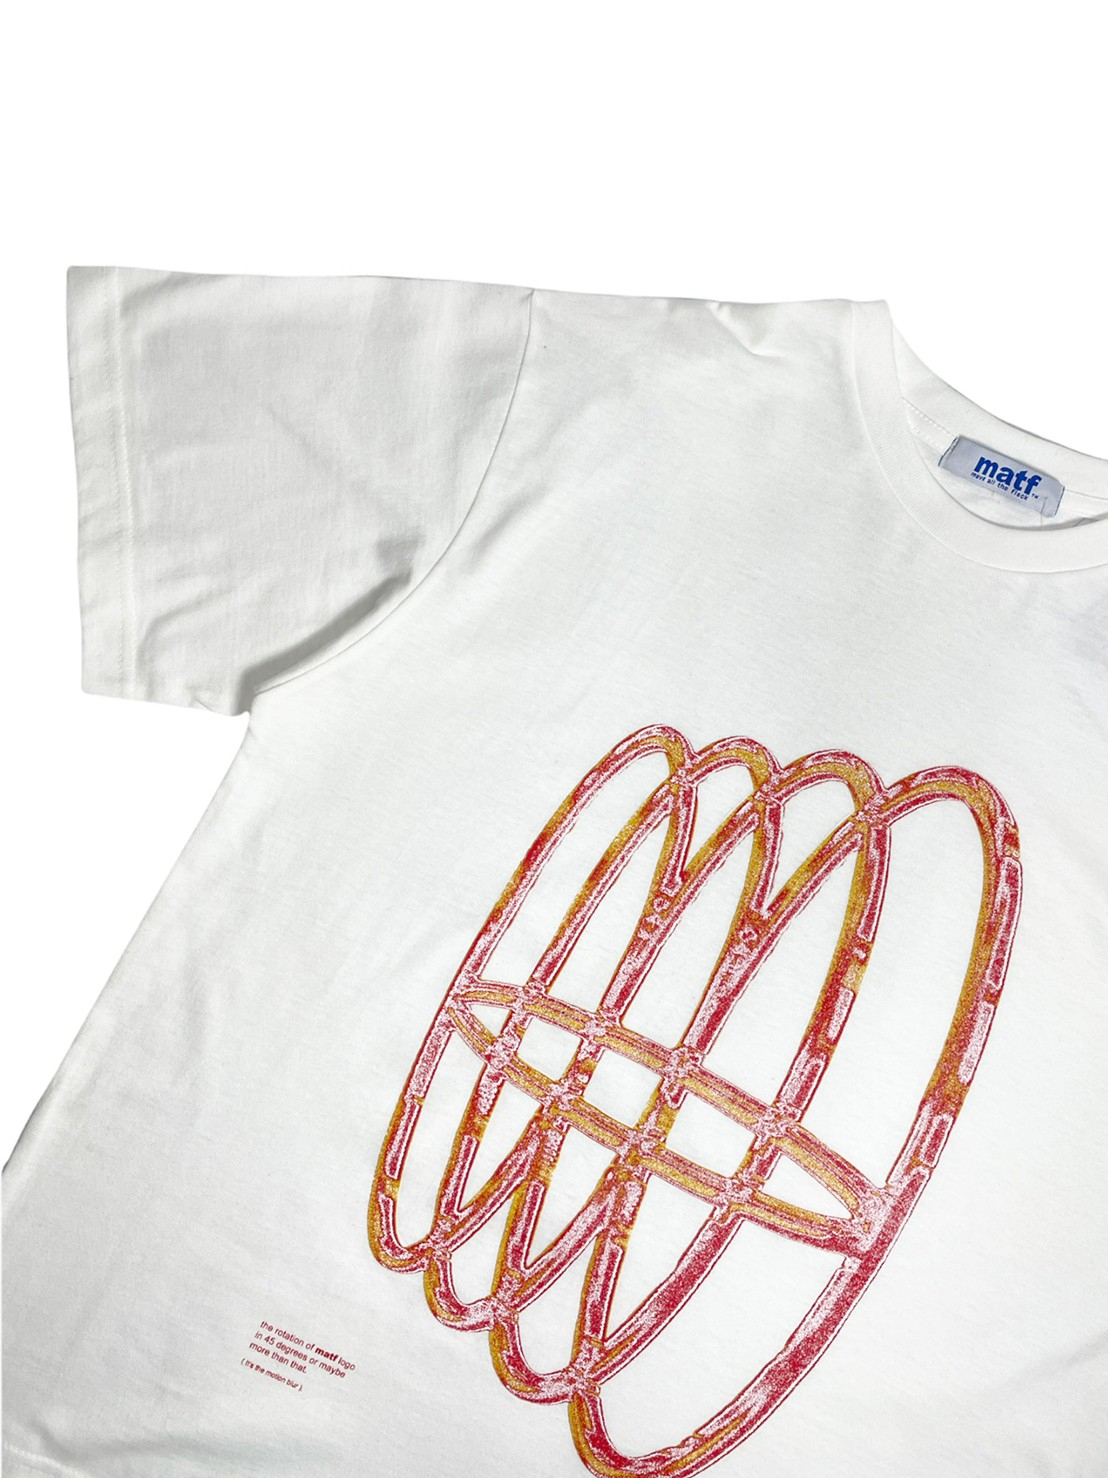 Matf *twist* t-shirt (white)